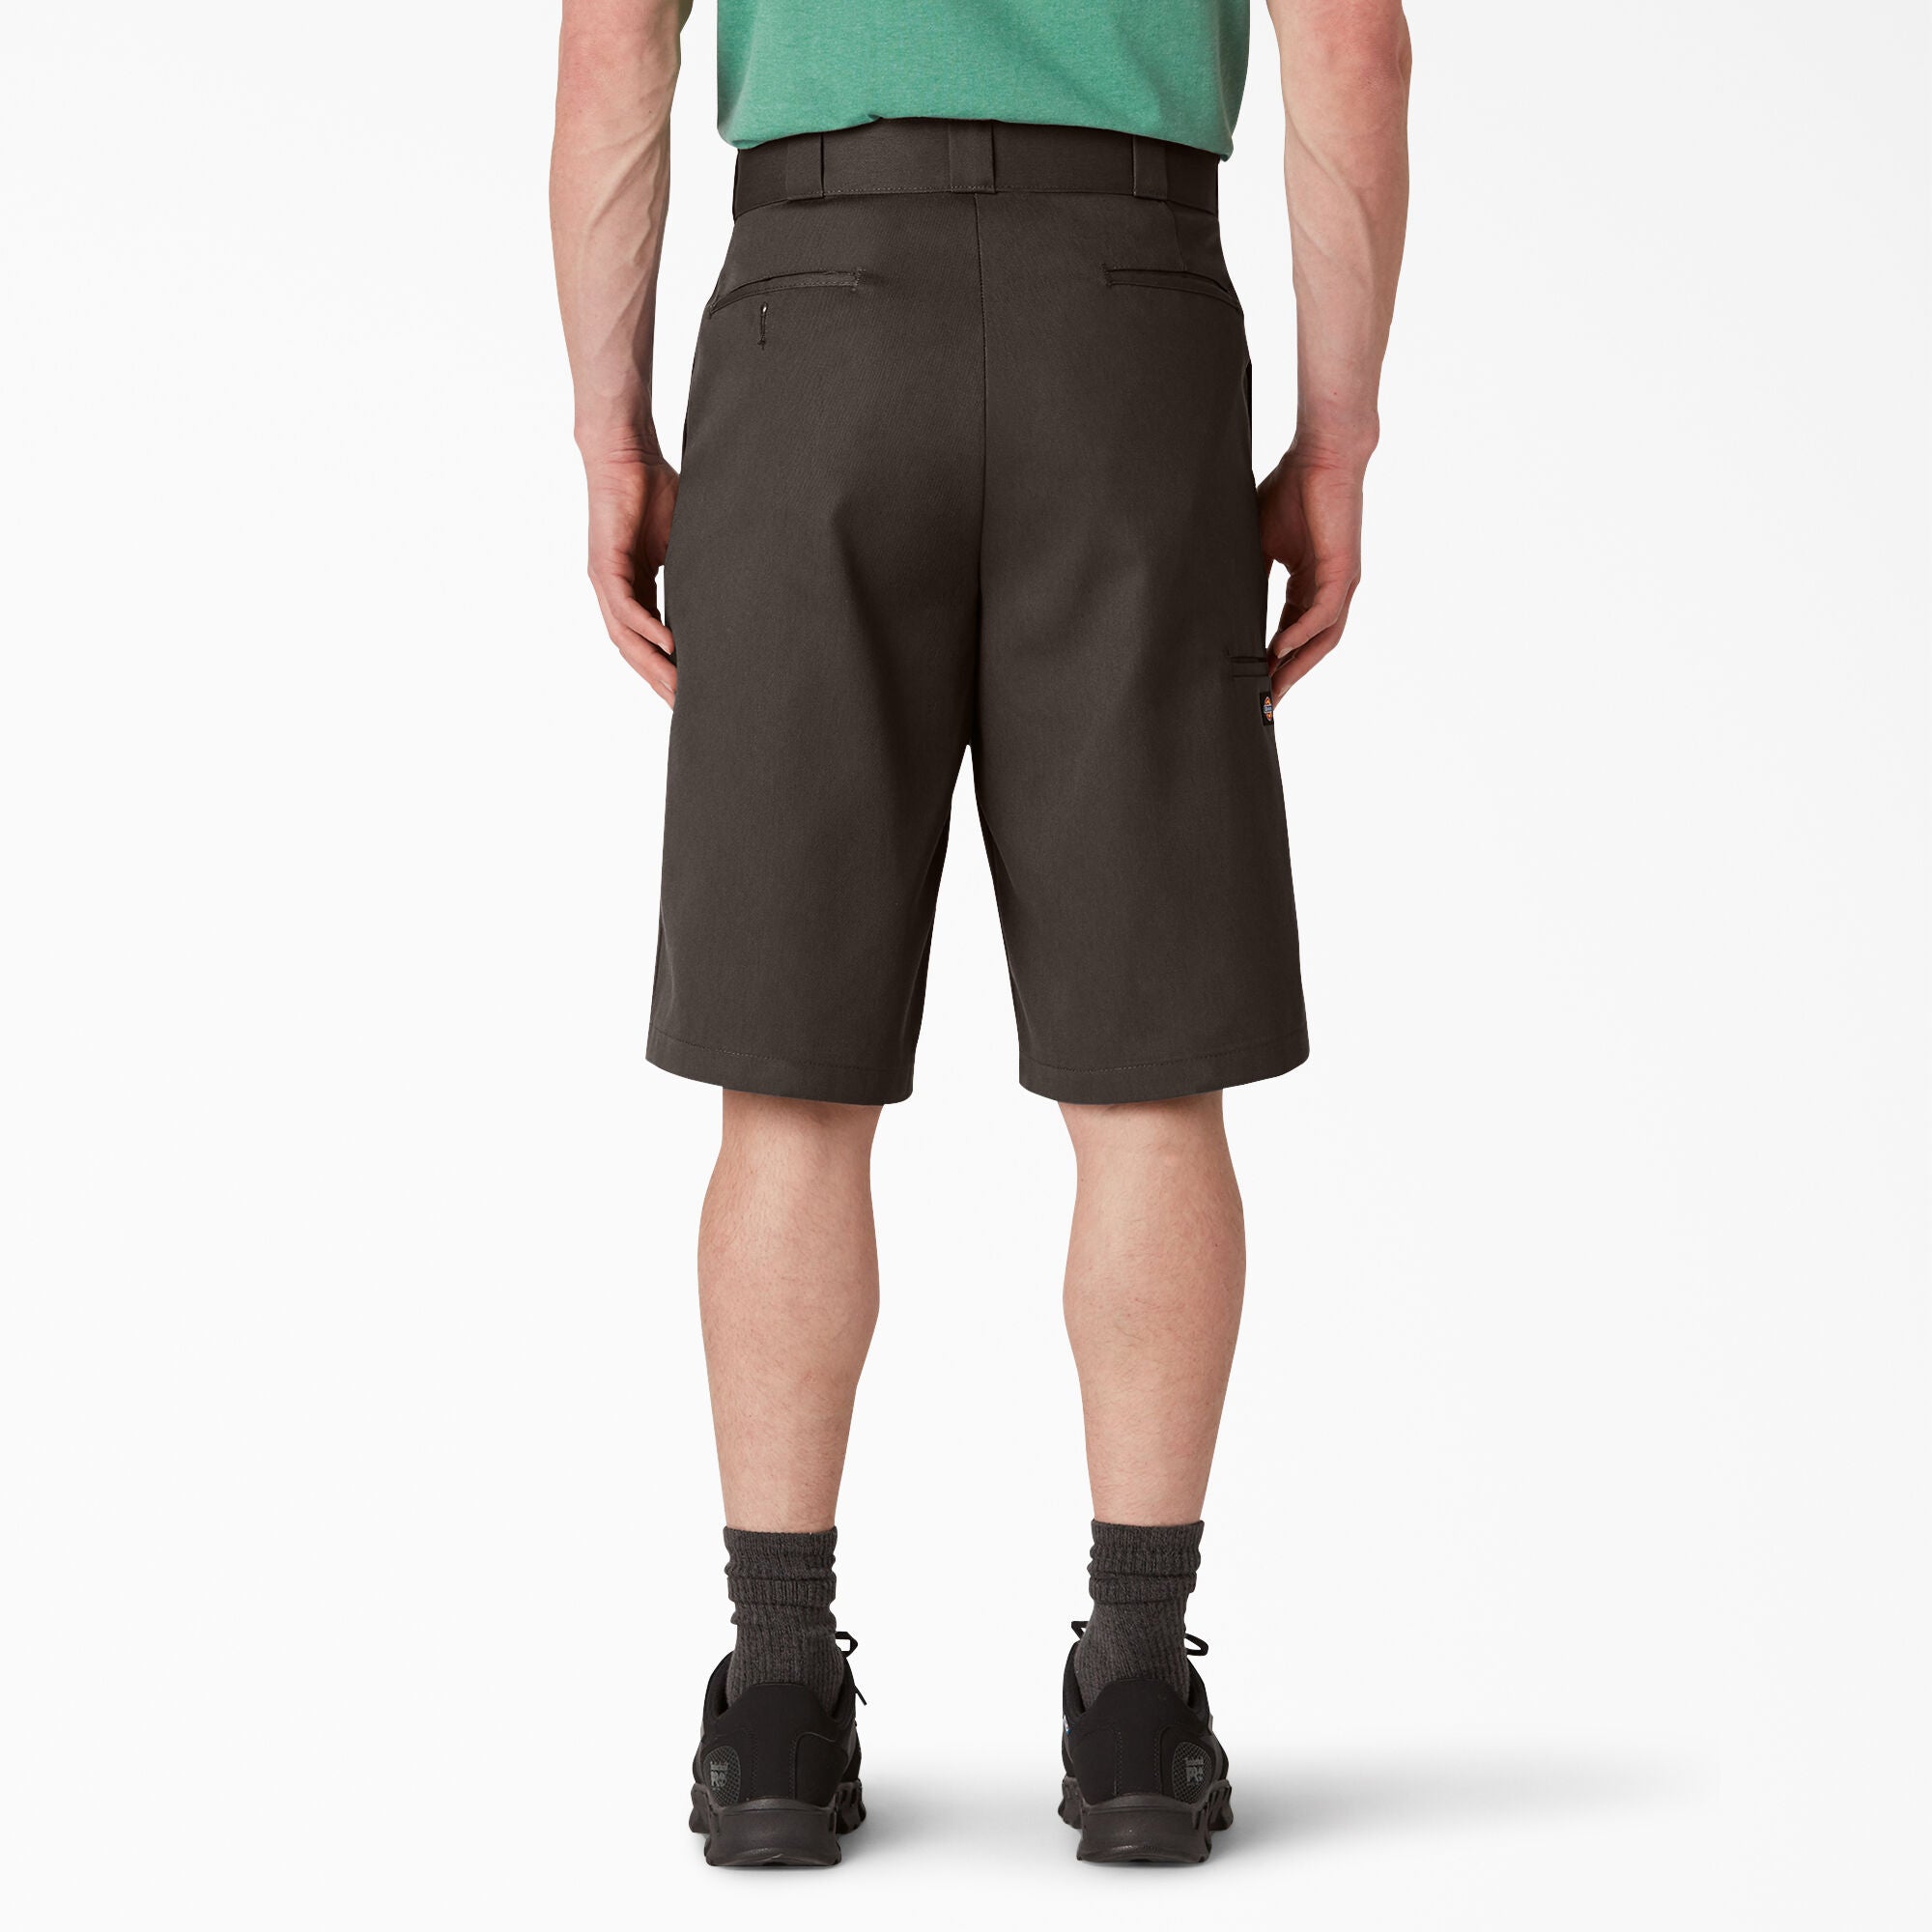 Dickies Loose Fit Flat Front Work Shorts, 13", Dark Brown